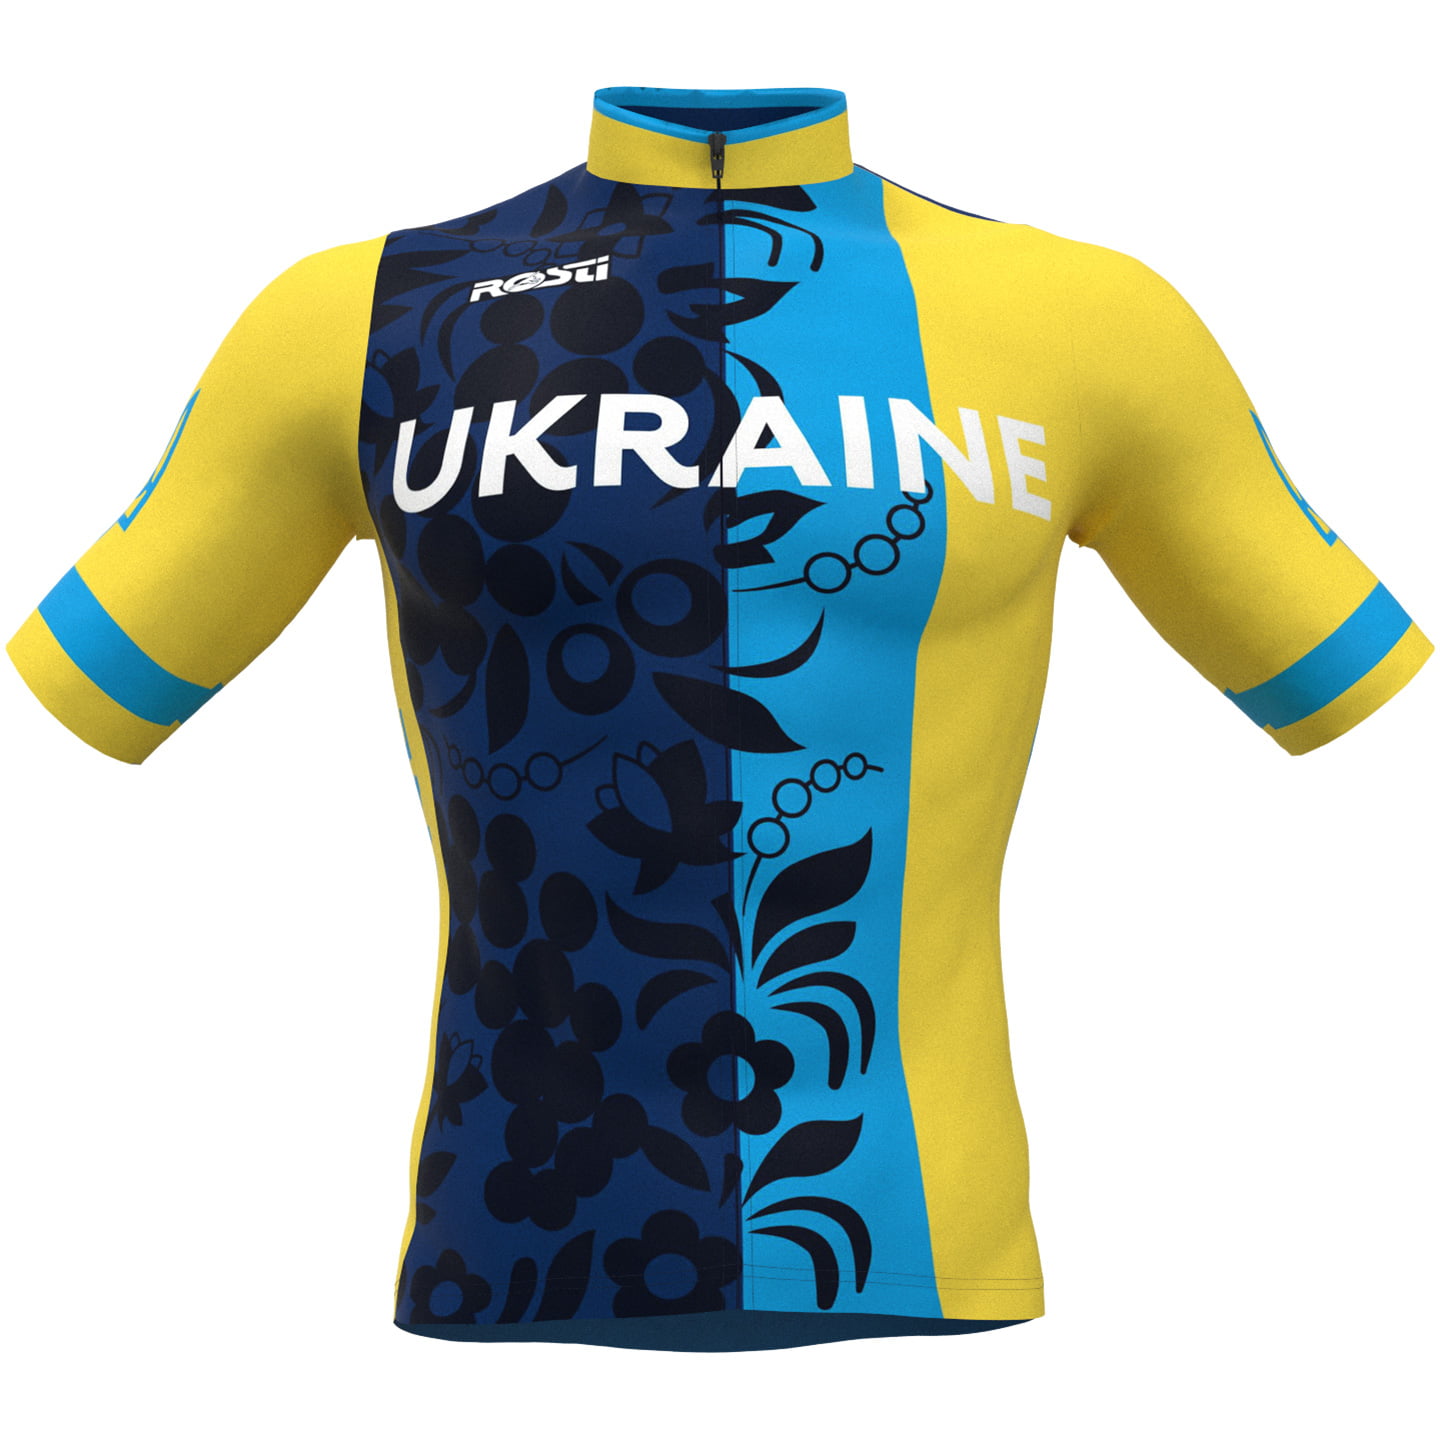 UKRAINIAN NATIONAL TEAM 2022 Short Sleeve Jersey Short Sleeve Jersey, for men, size S, Cycling jersey, Cycling clothing